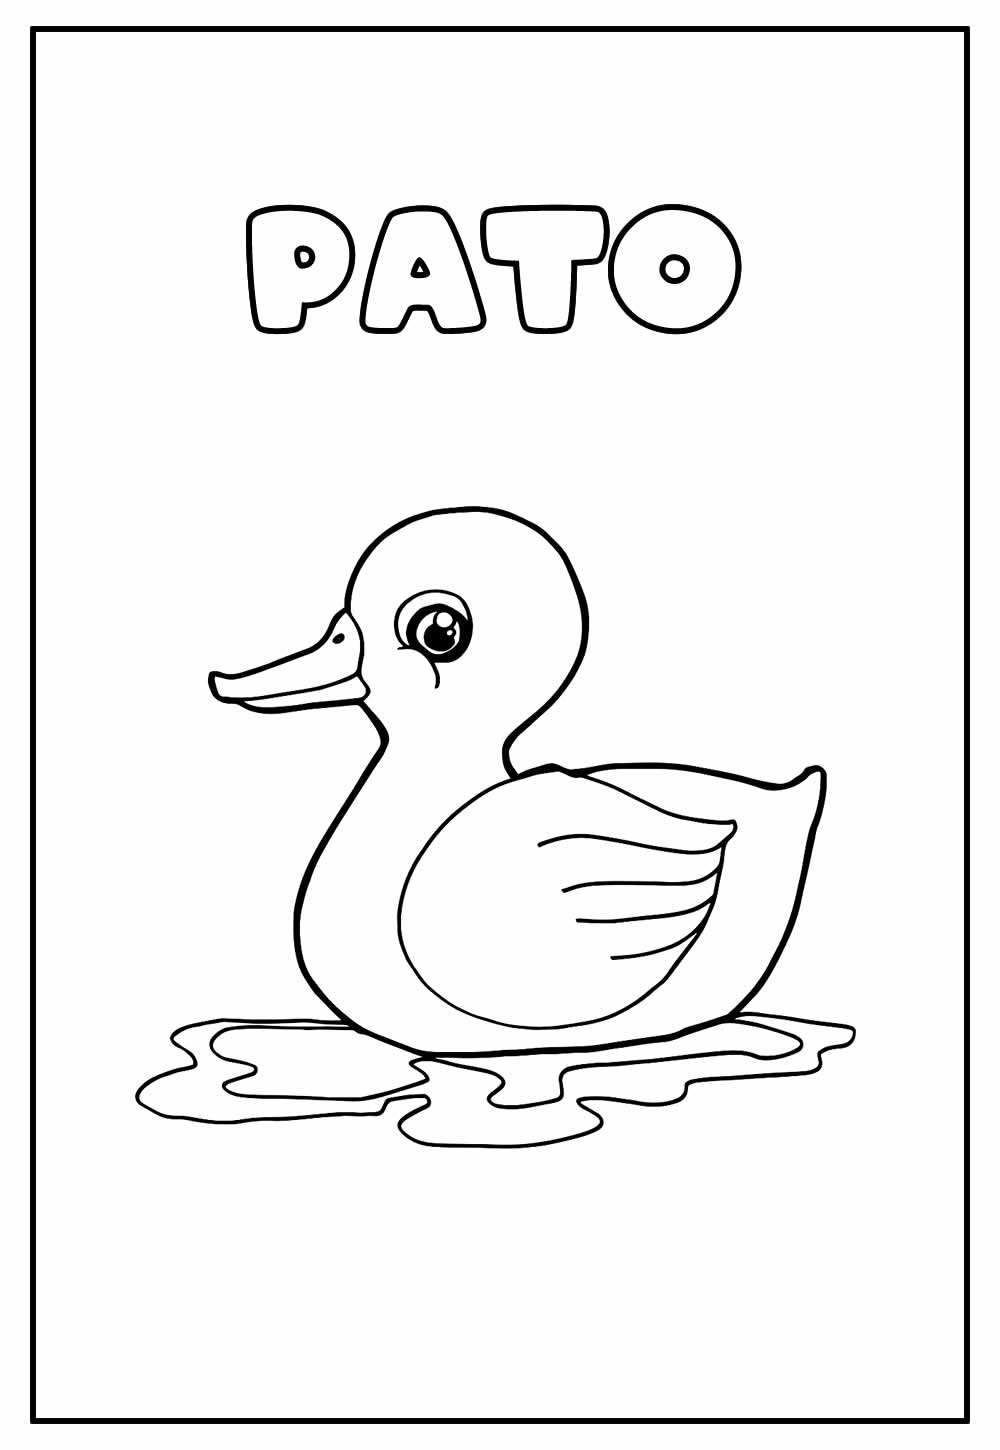 Desenho Educativo de Pato para colorir